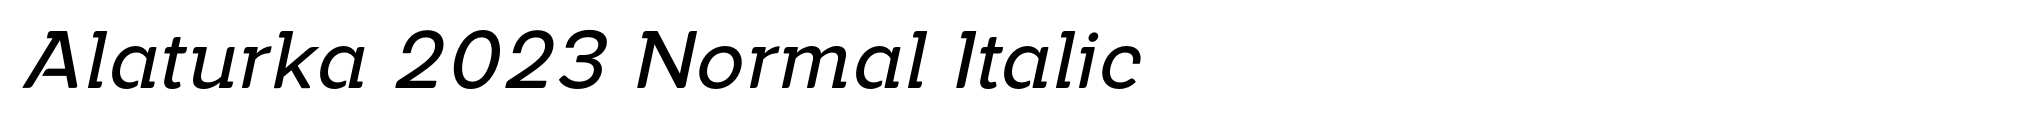 Alaturka 2023 Normal Italic image